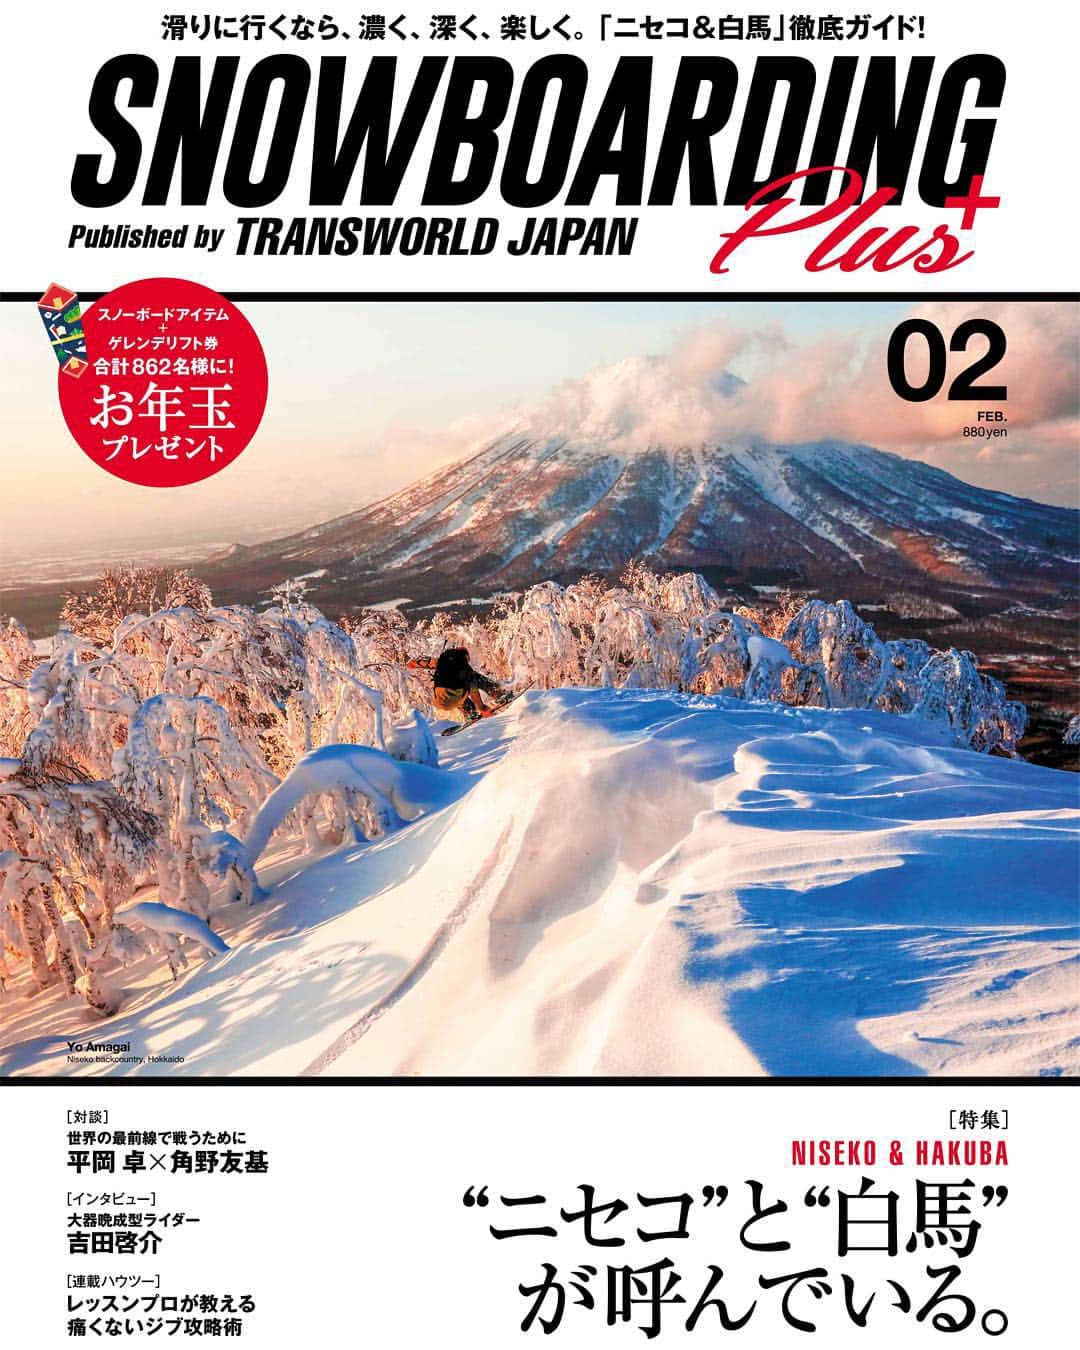 TransWorld SNOWboarding Japanのインスタグラム